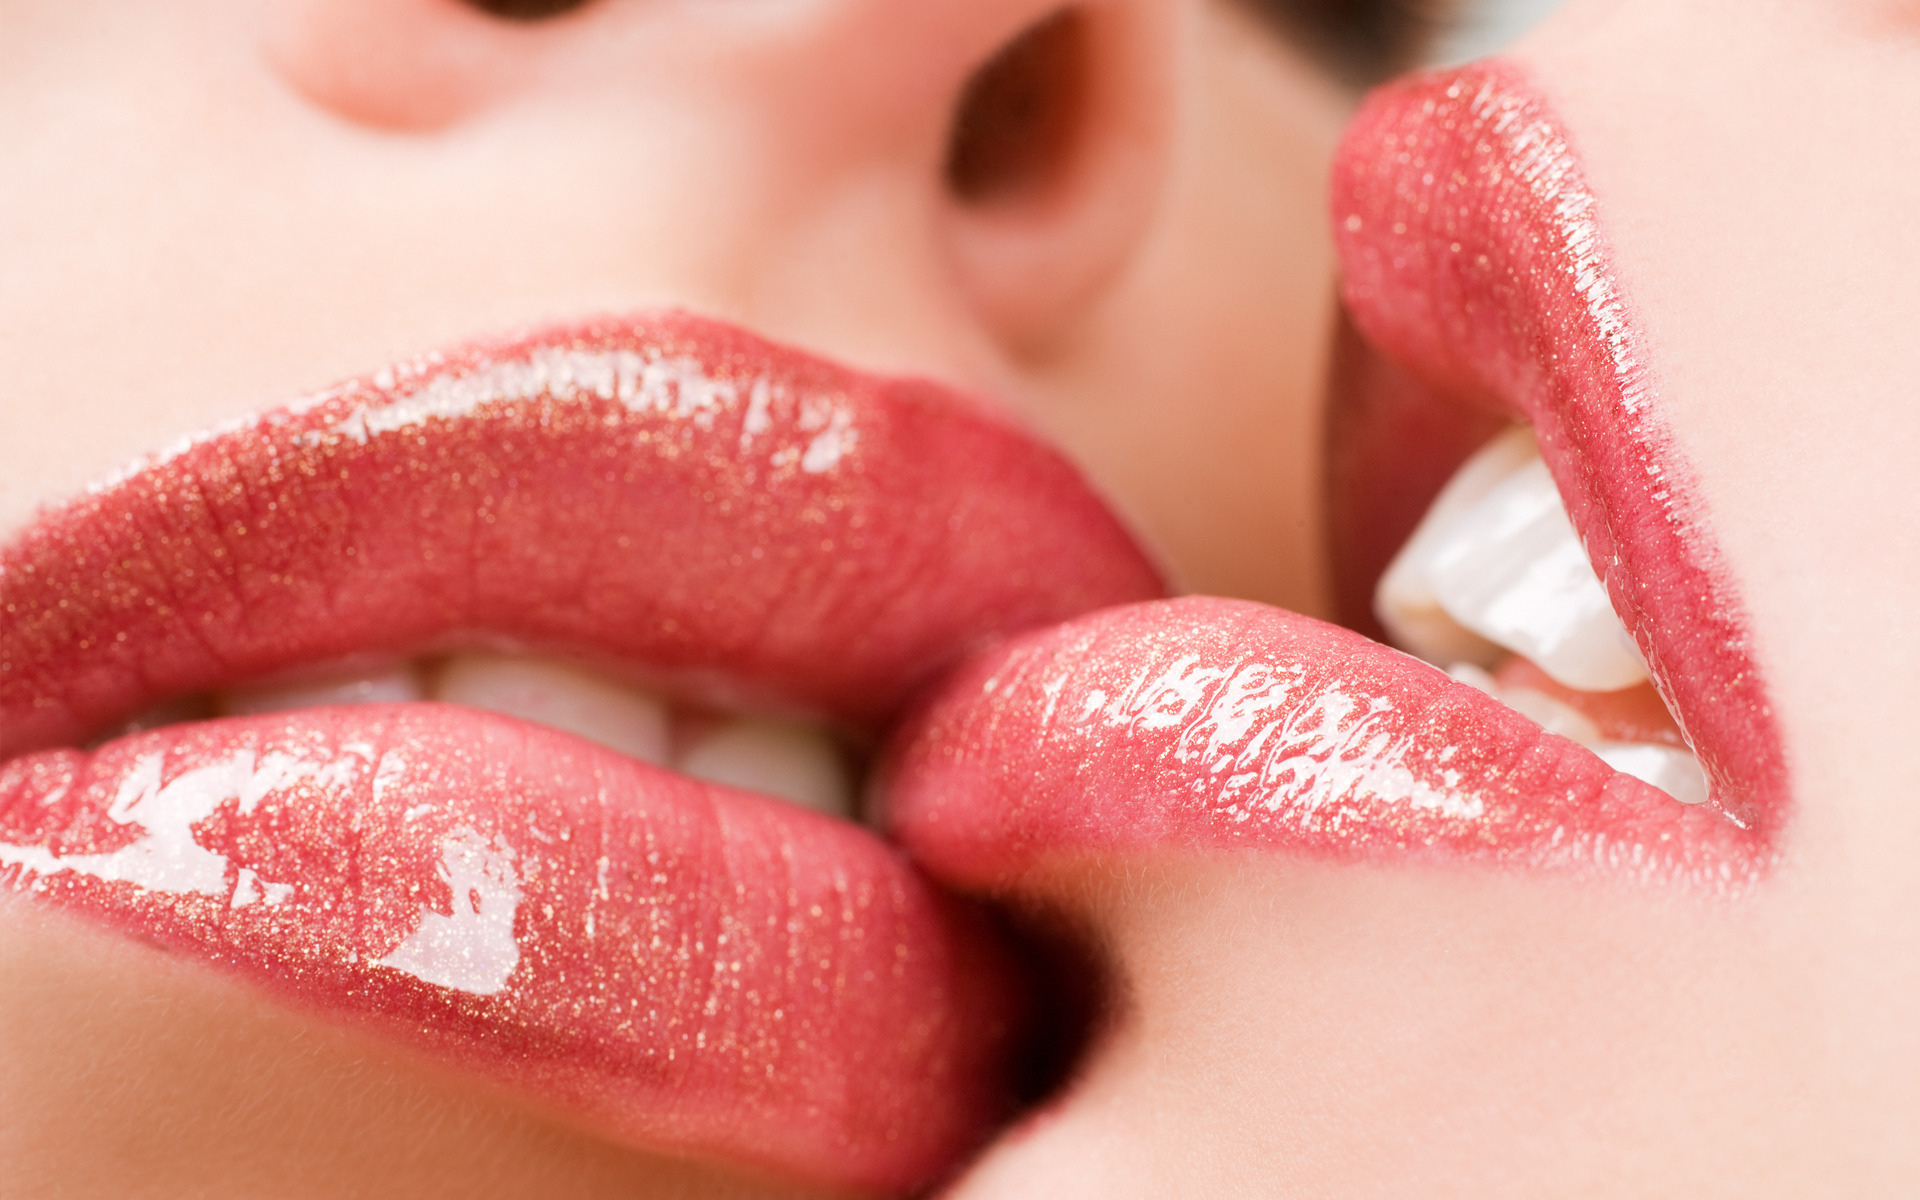 Lesbian lipstick makeout session best adult free image